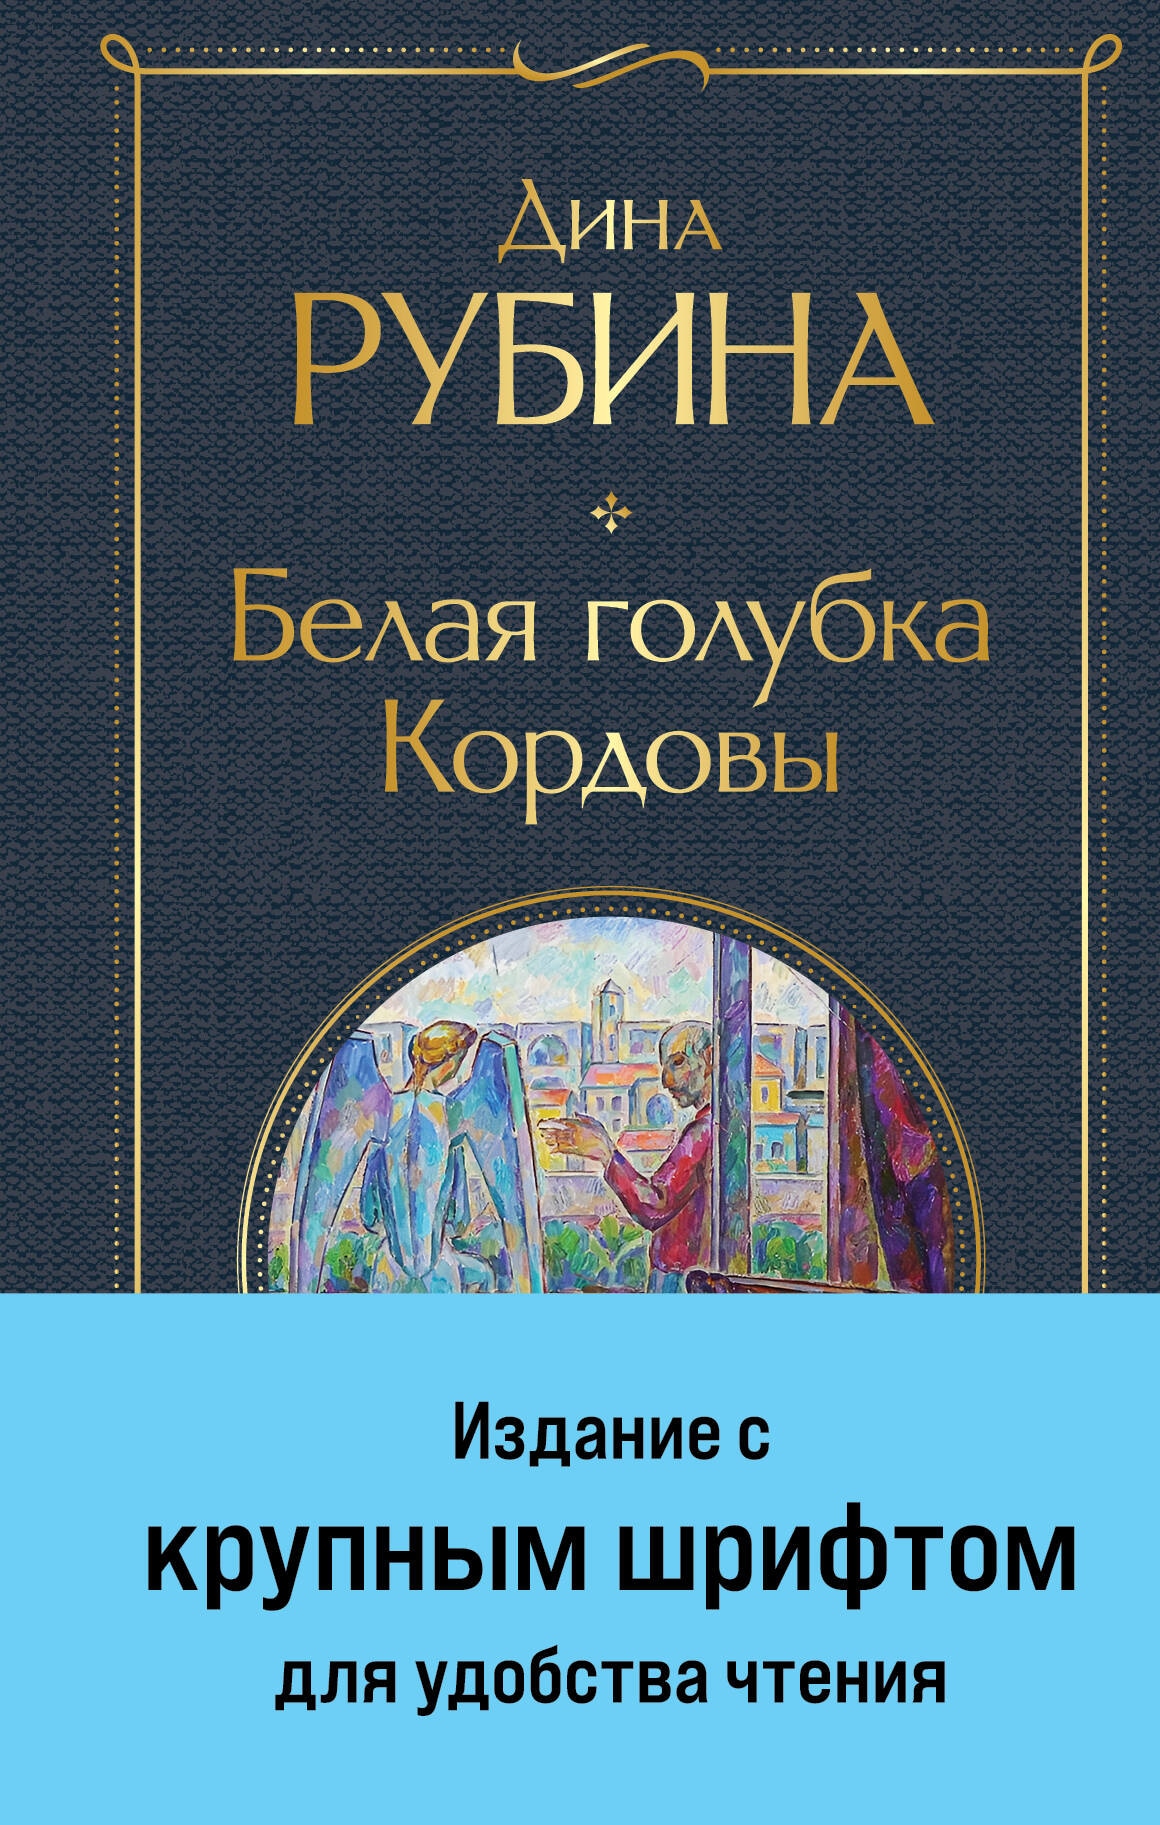 Book “Белая голубка Кордовы” by Дина Рубина — 2023